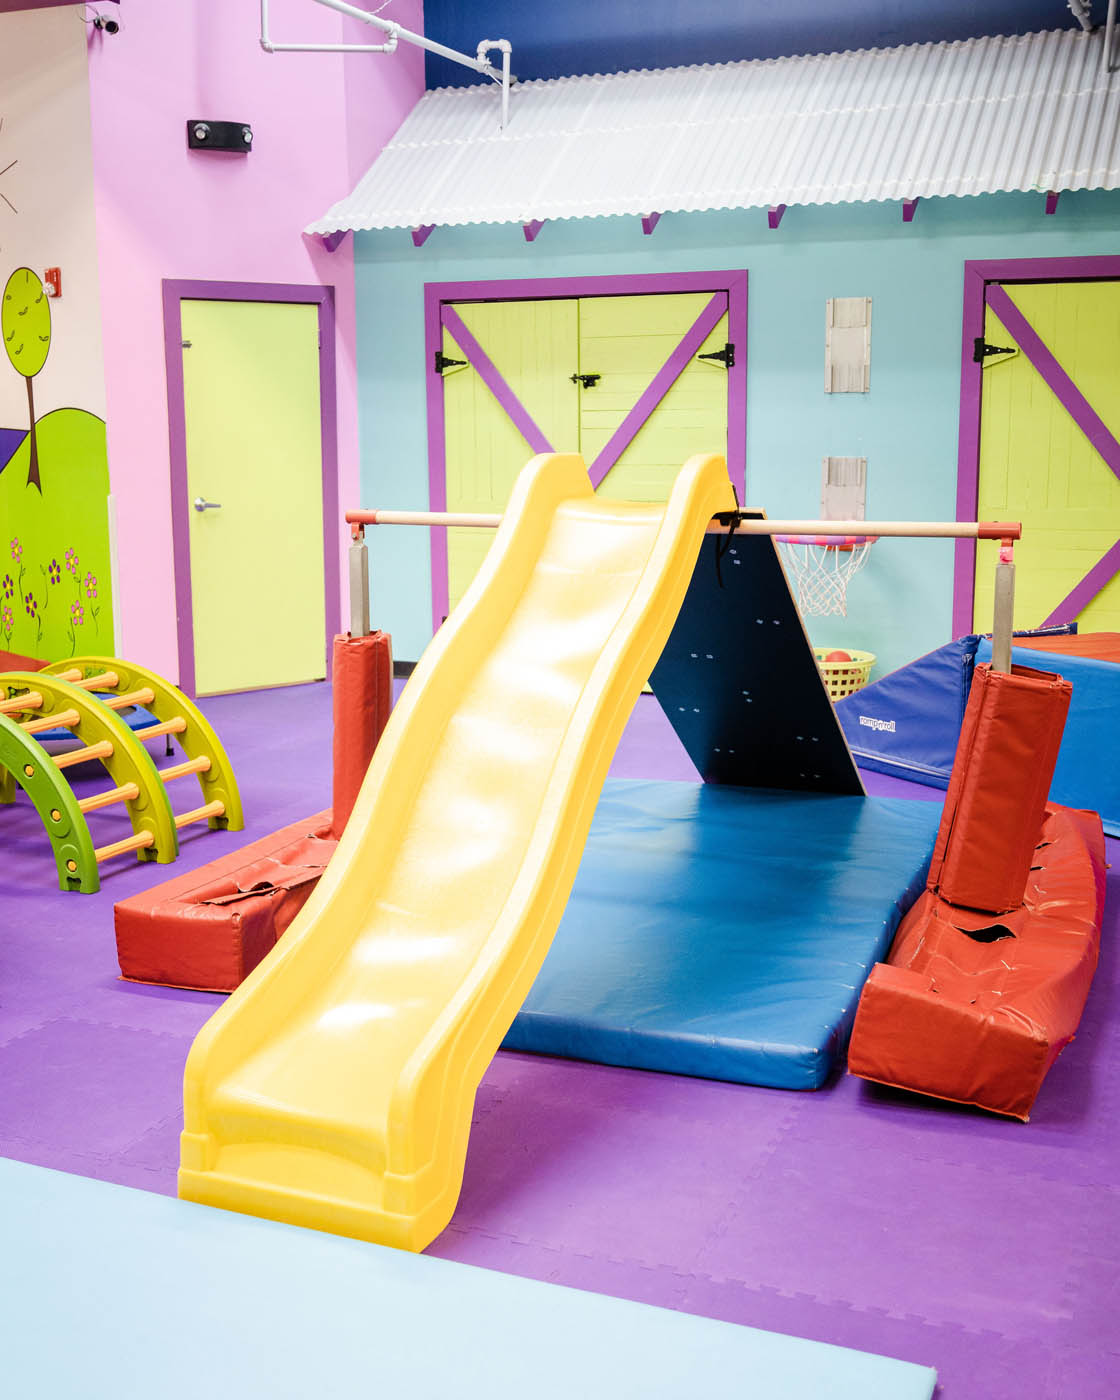 A Romp n' Roll Midlothian slide, indoor playgrounds in Midlothian, VA.